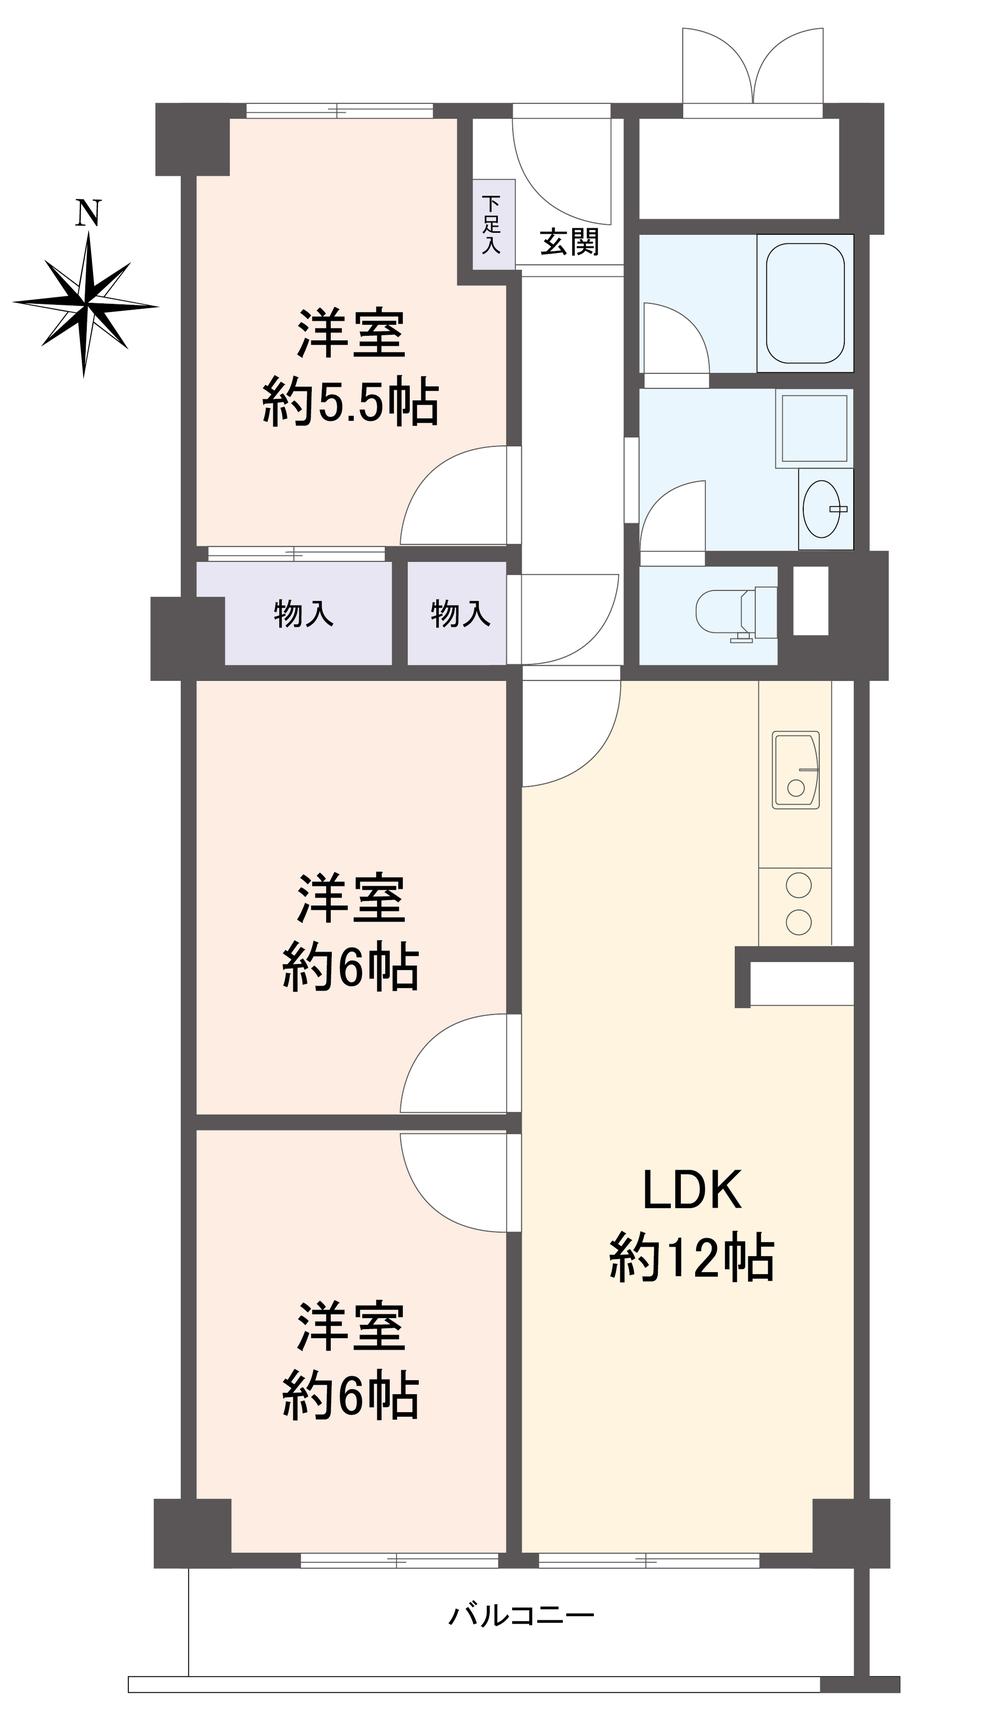 Floor plan. 3LDK, Price 11.9 million yen, Footprint 66 sq m , Balcony area 6.6 sq m